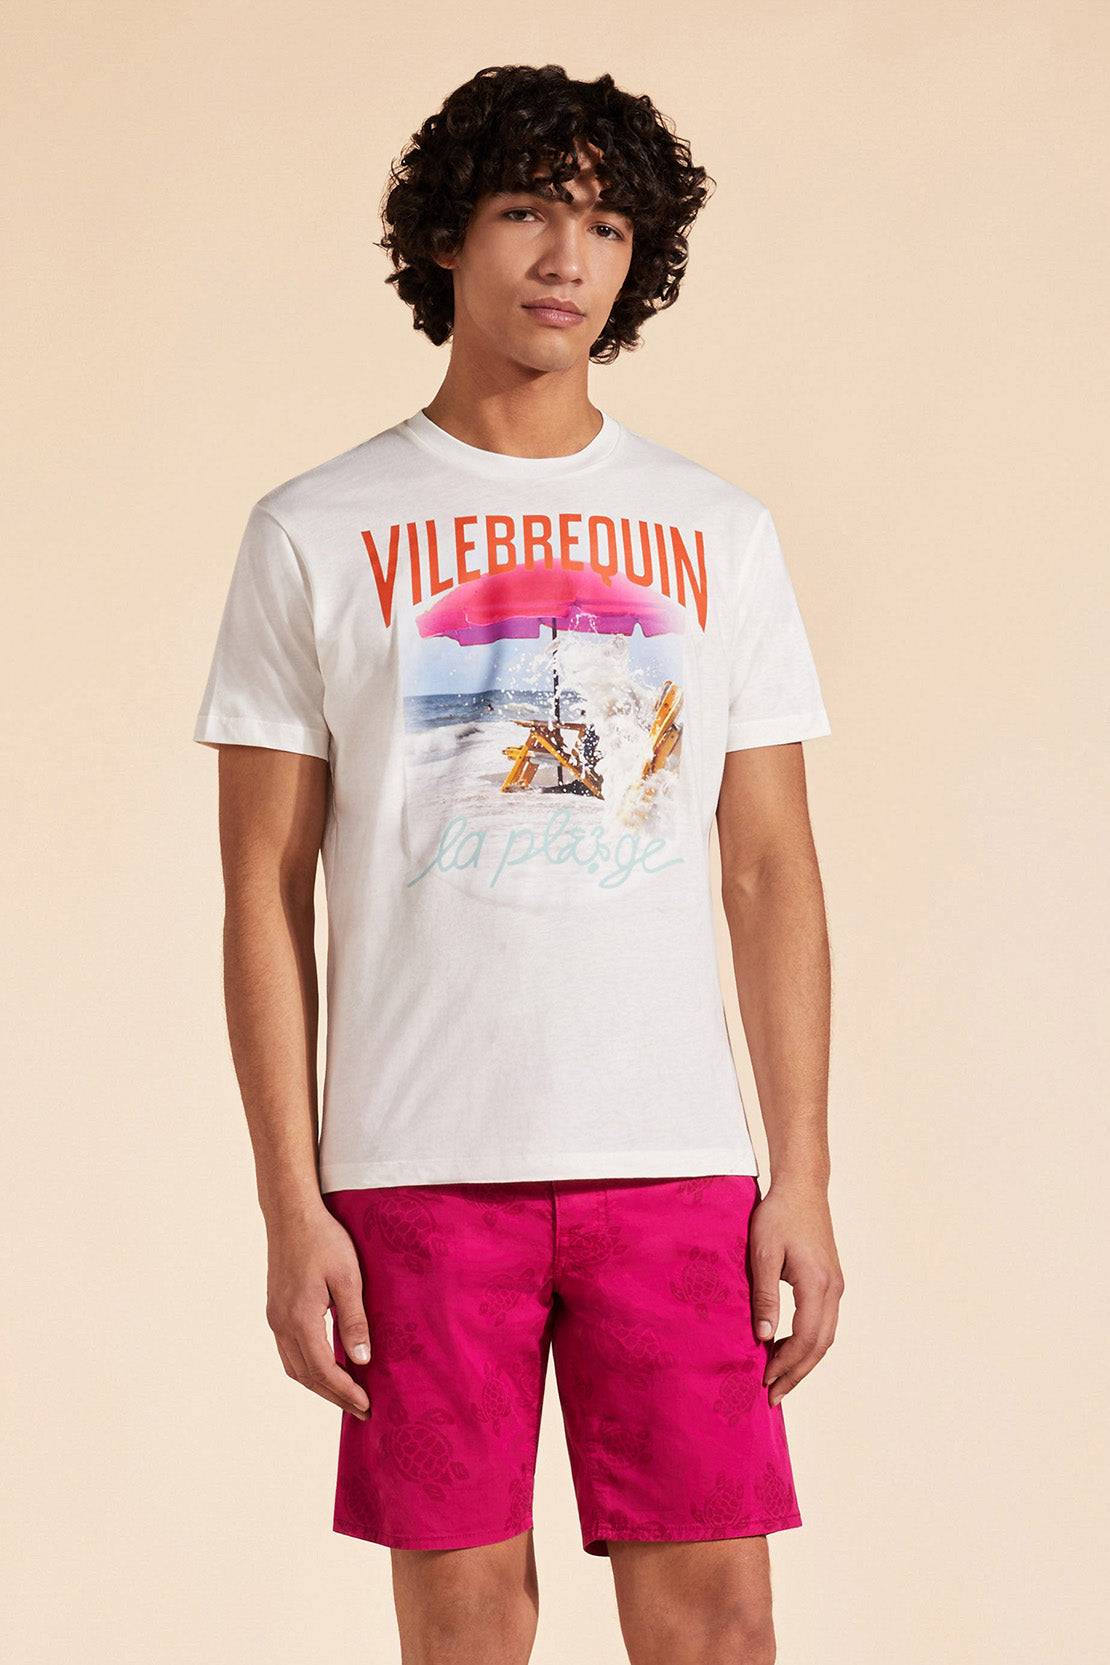 VILEBREQUIN - PORTISOL Cotton T-Shirt WAVE ON VBQ BEACH in Off White PTSAP36